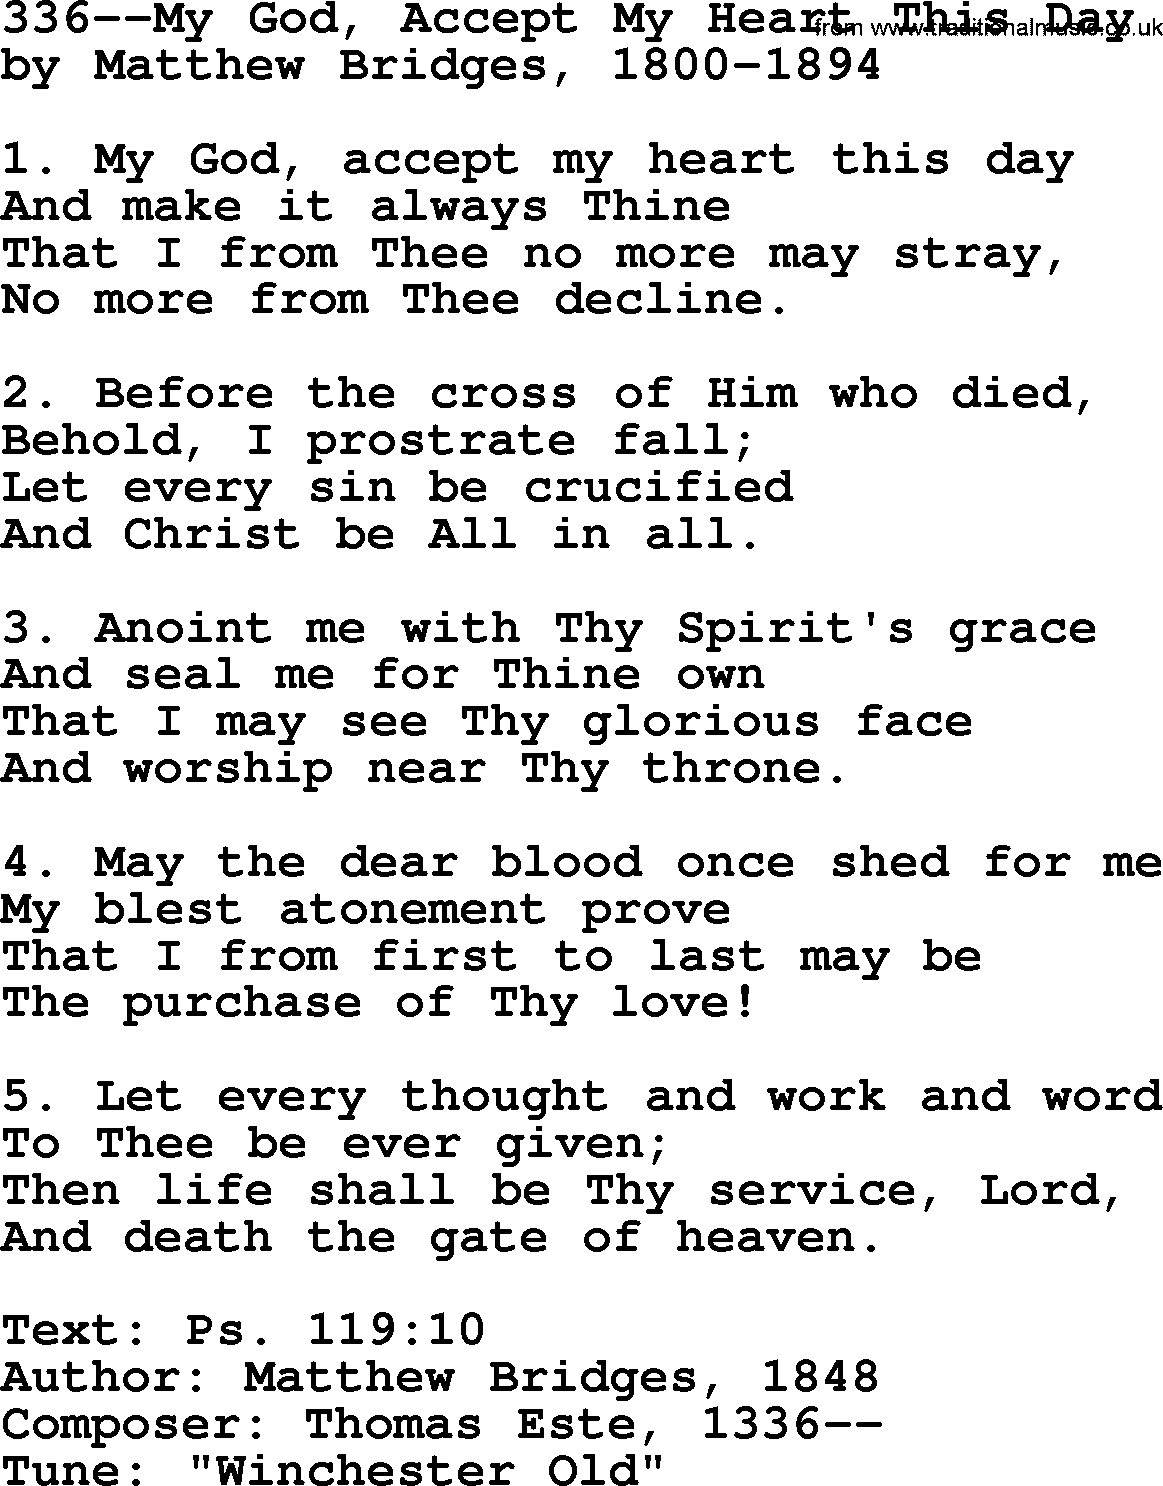 Lutheran Hymn: 336--My God, Accept My Heart This Day.txt lyrics with PDF